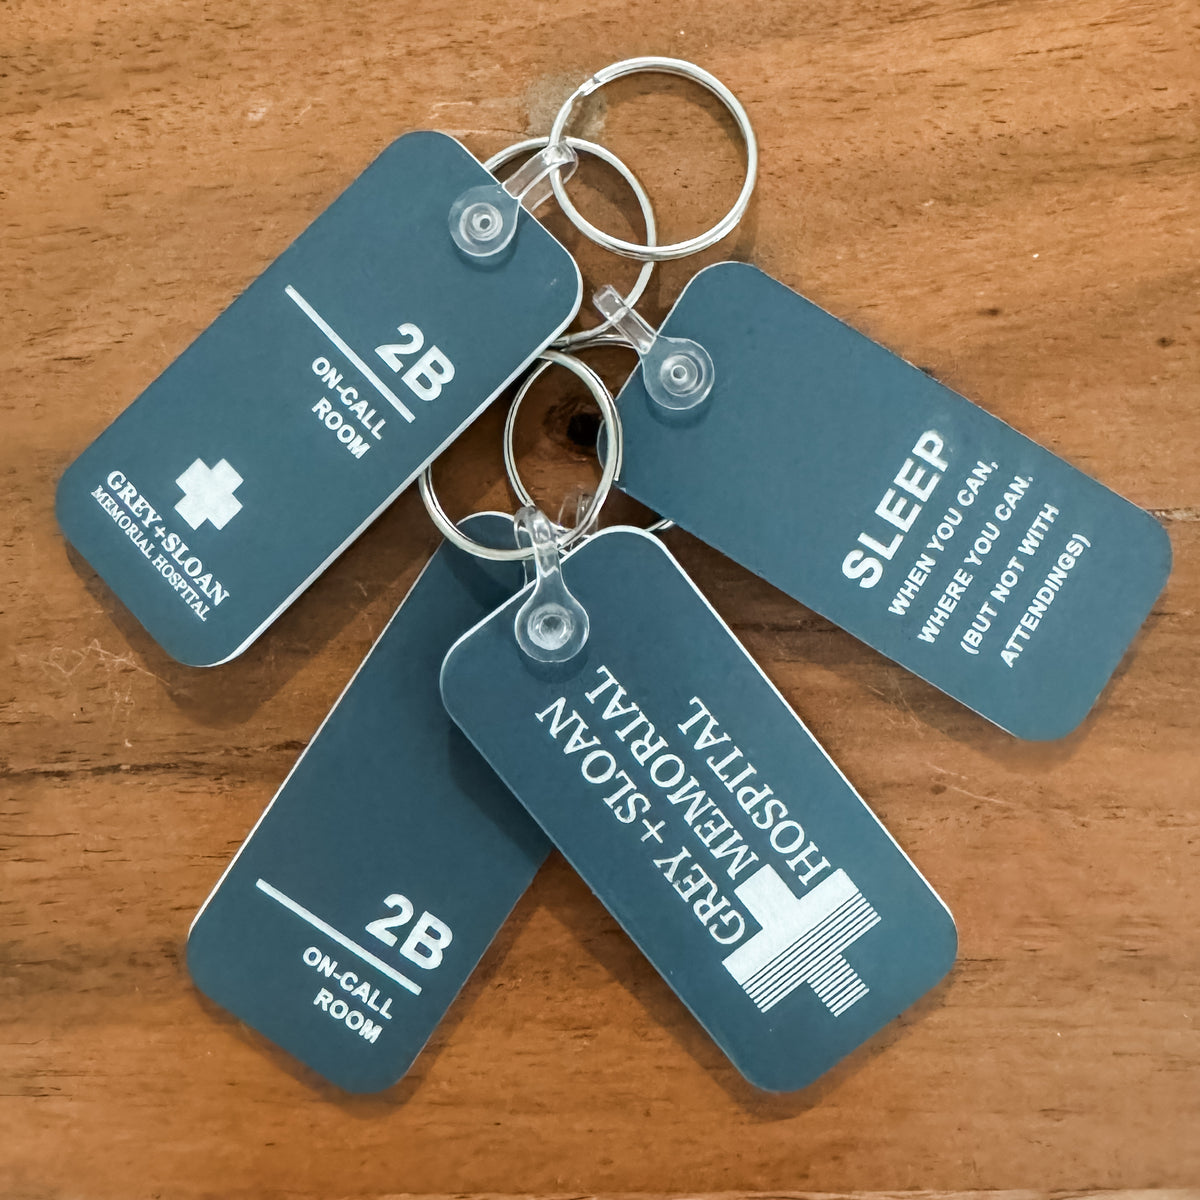 Grey's Anatomy - On Call Room keychain